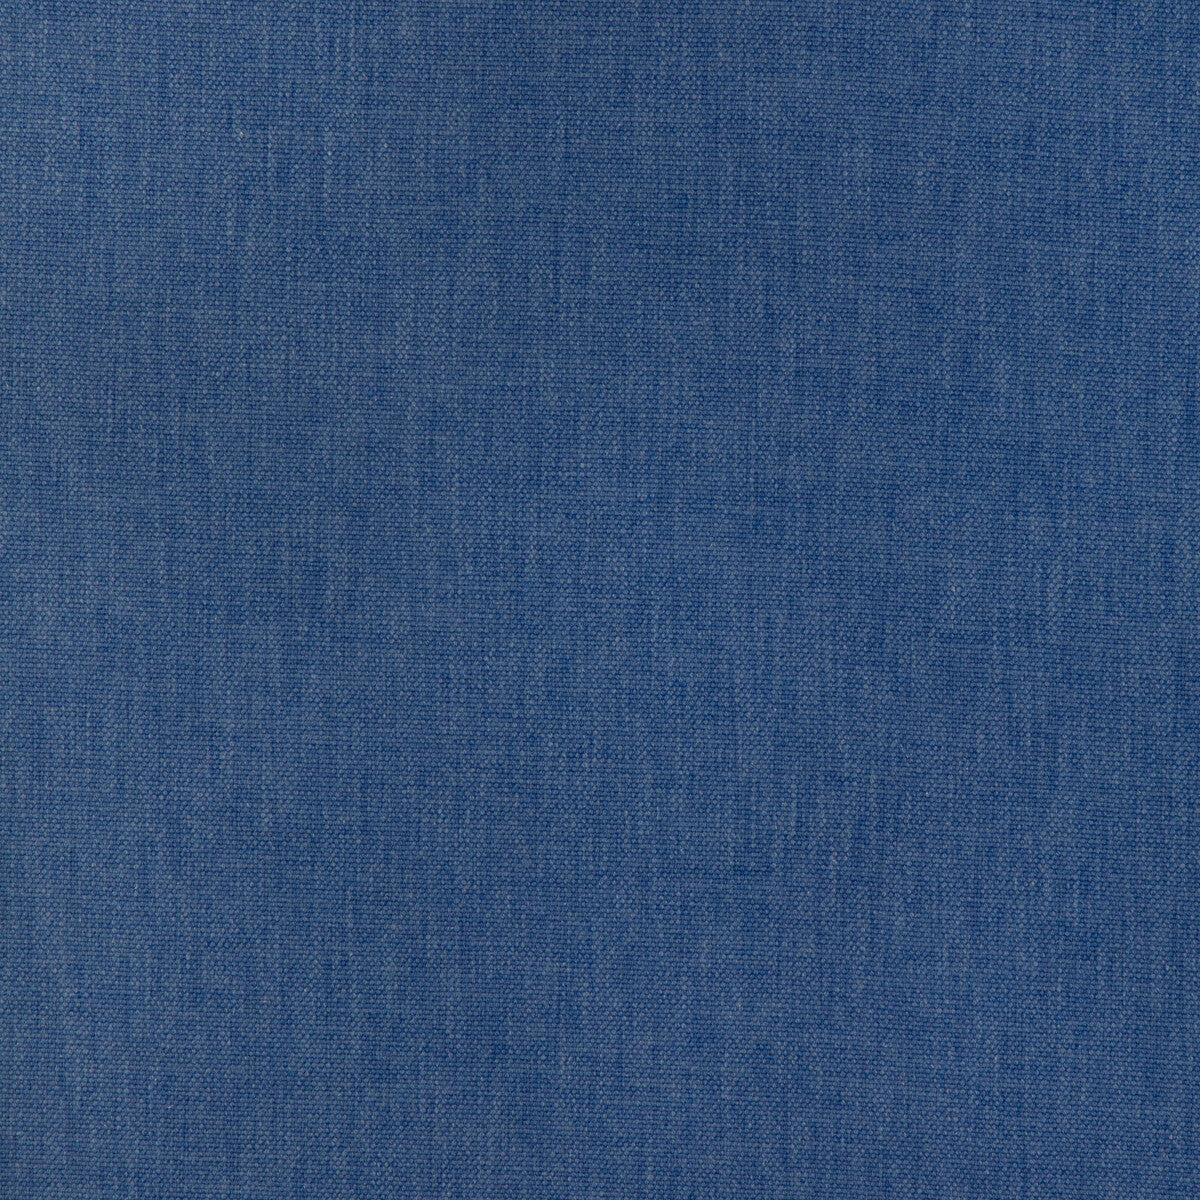 Kravet Smart fabric in 37066-515 color - pattern 37066.515.0 - by Kravet Smart